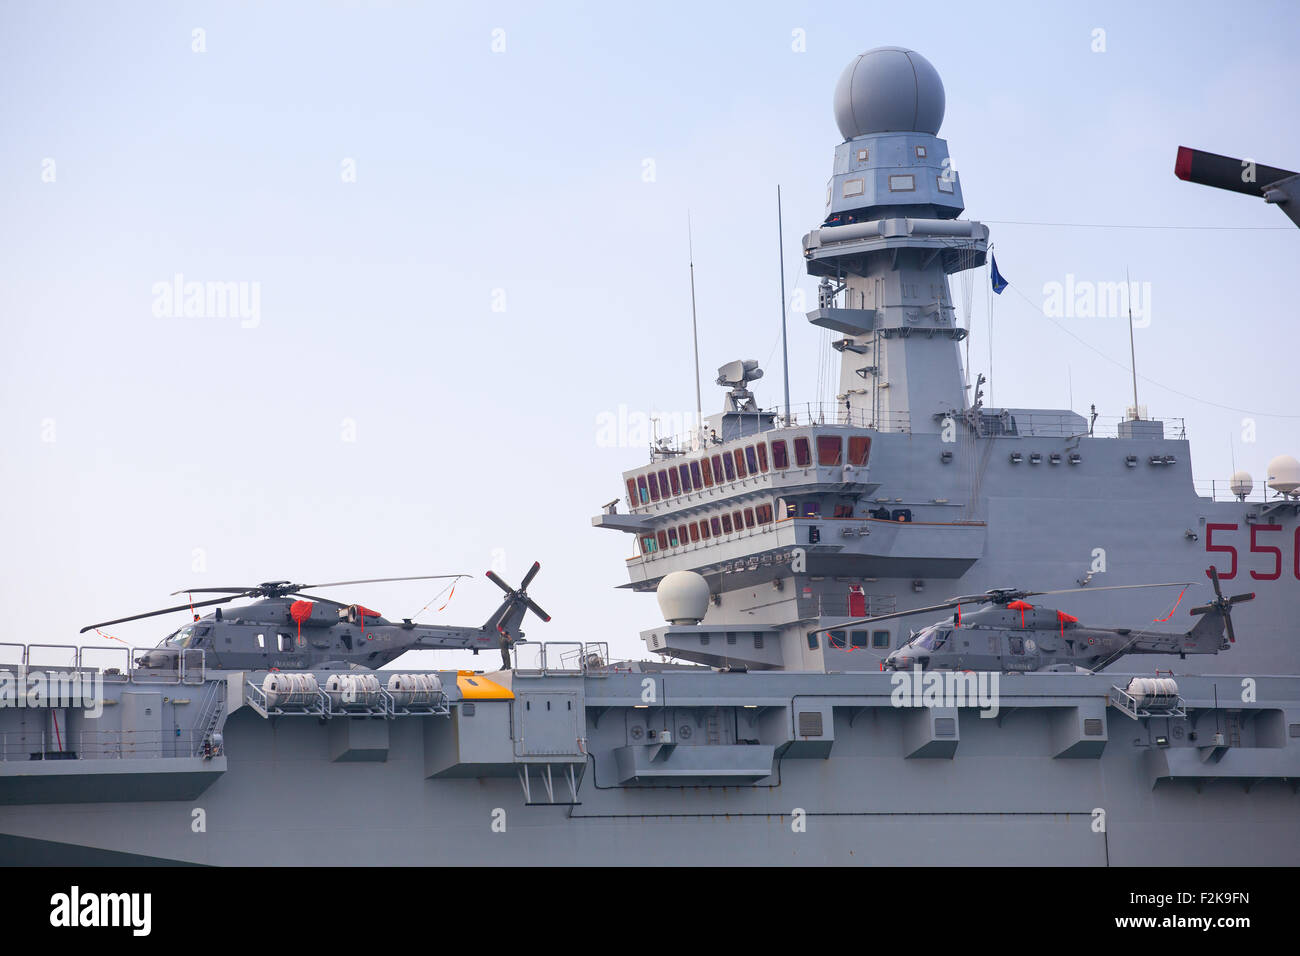 TRIESTE, Italia - 02 de noviembre: vista de la Frigata Virginio Fasan de la Marina italiana en Noviembre 02, 2014 Foto de stock